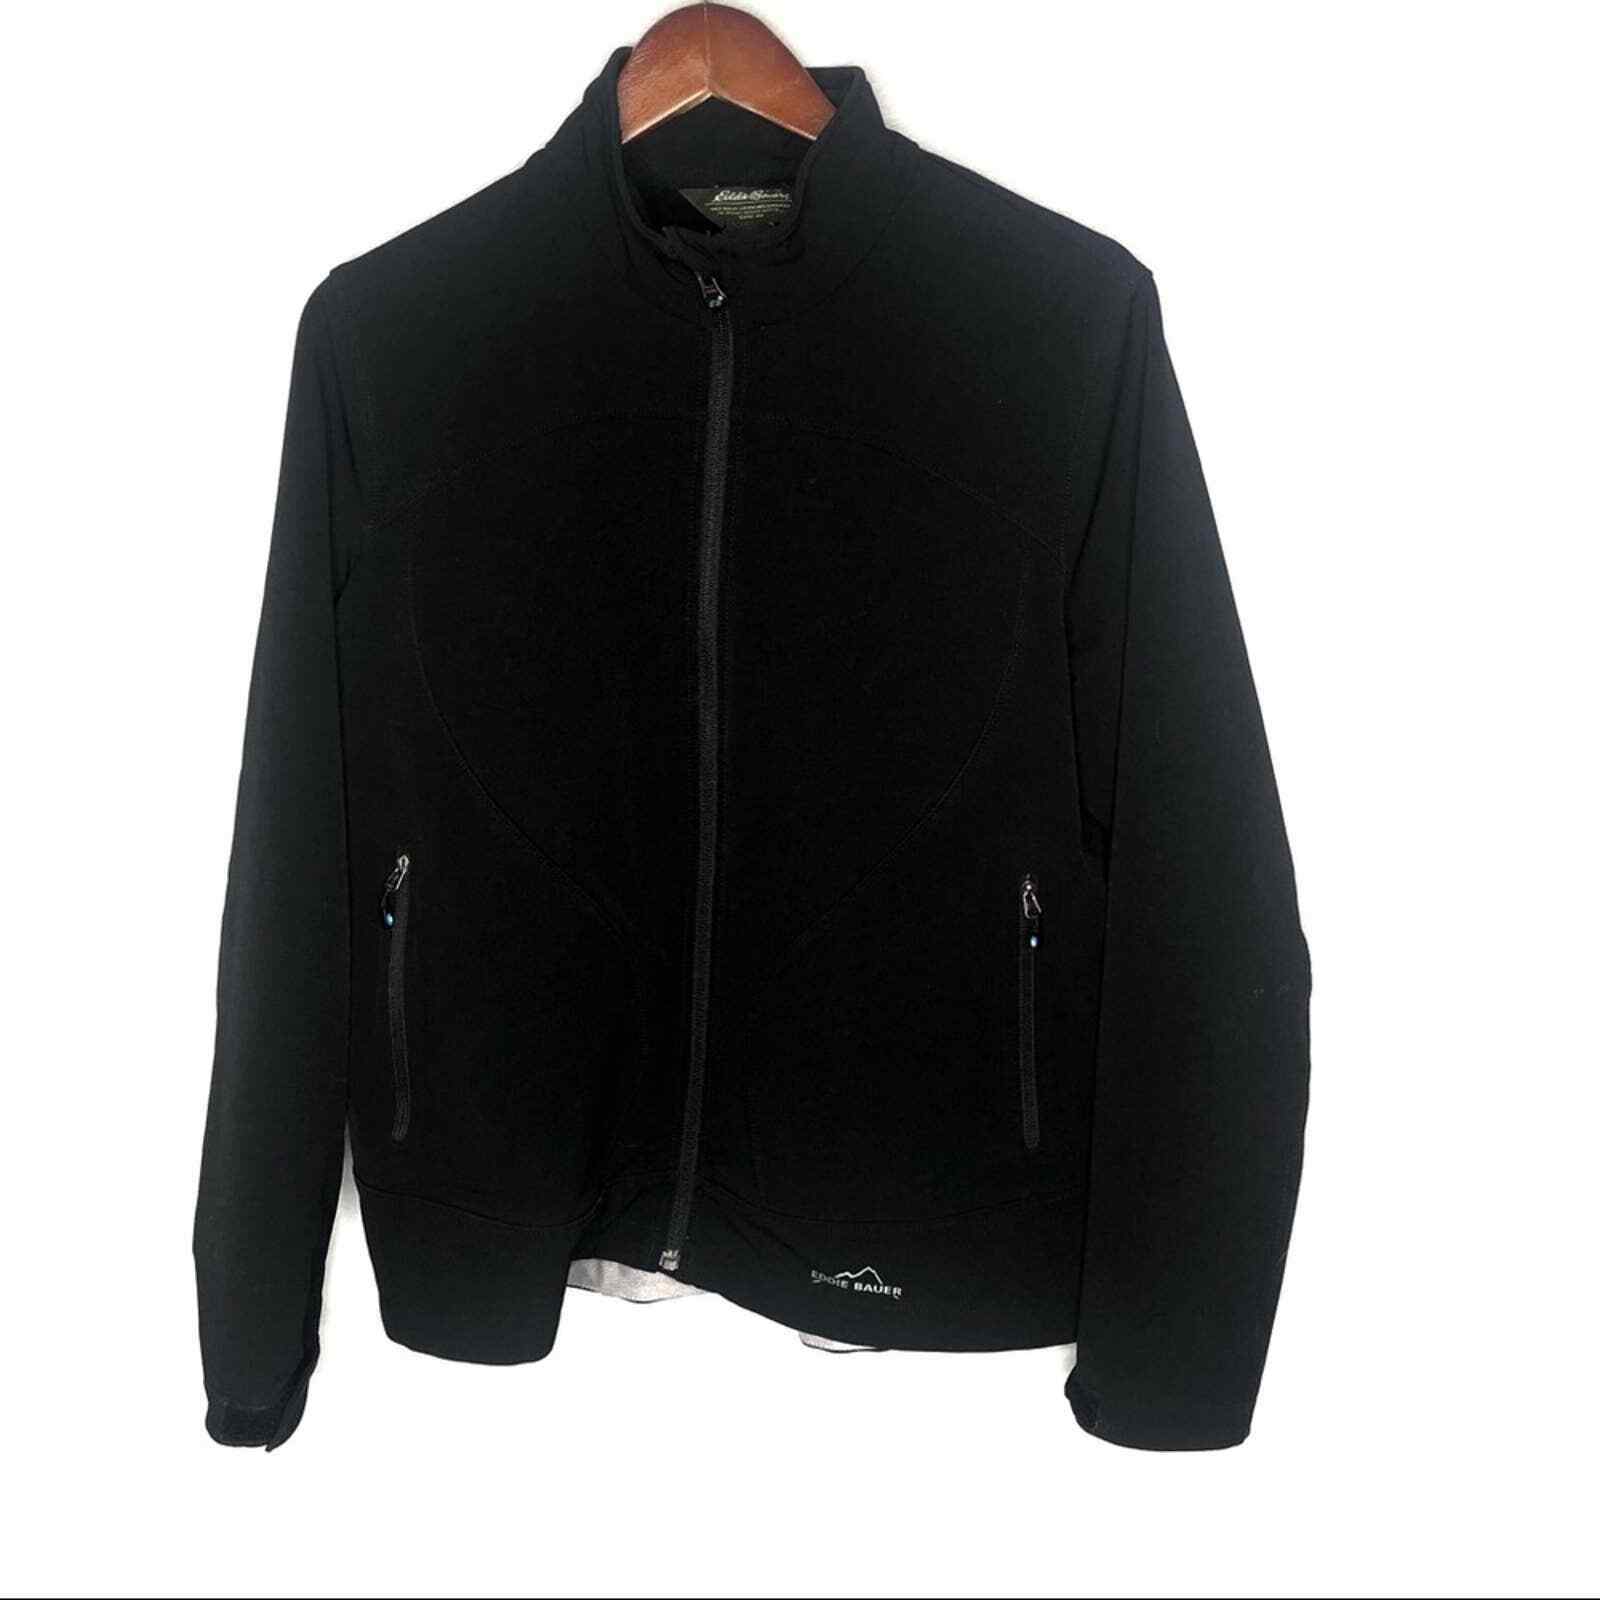 Eddie Bauer black long sleeve zip up jacket front pockets outdoor coat jacket XL